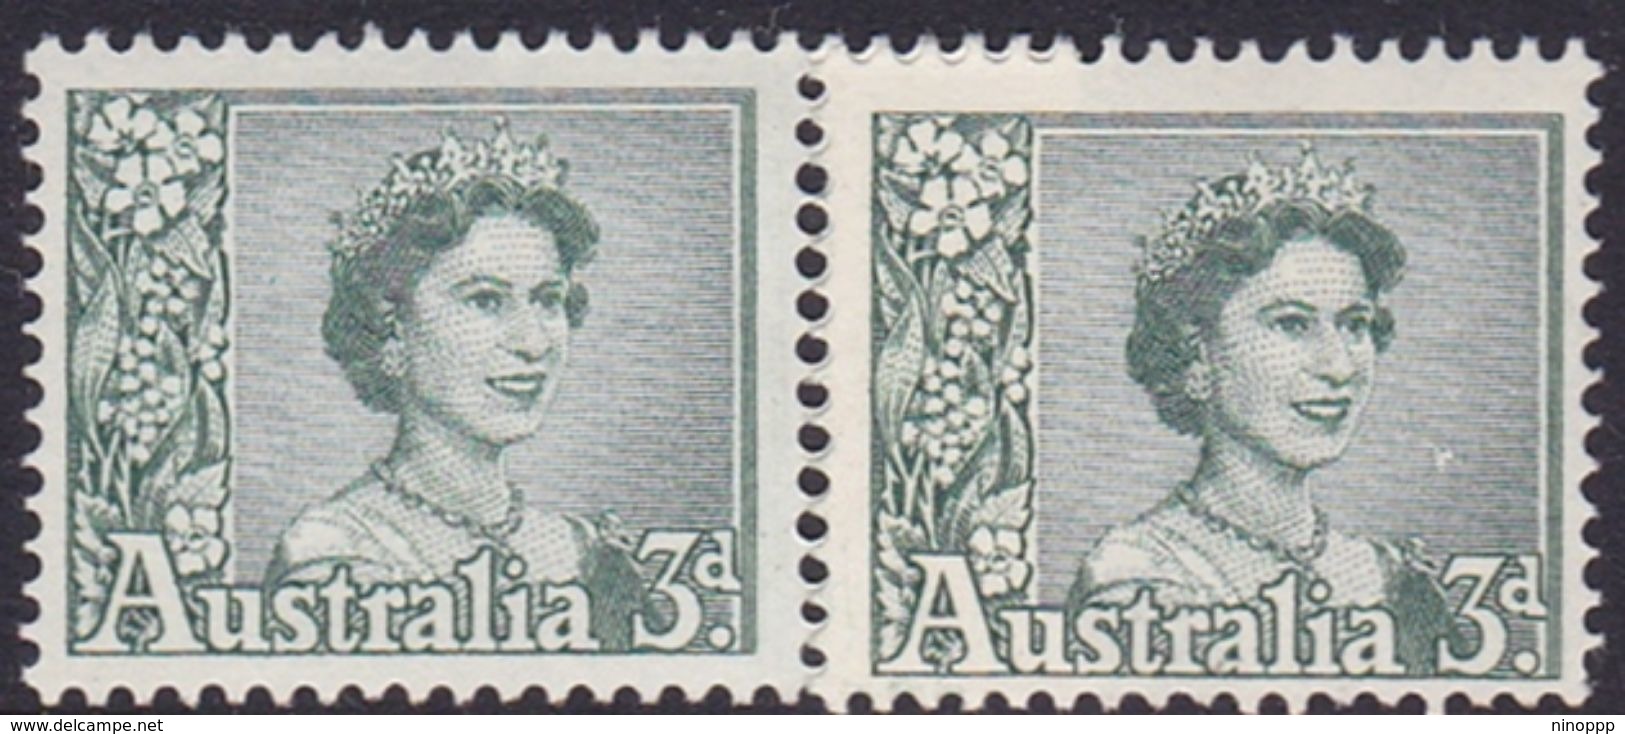 Australia ASC 343 1959 Queen Elizabeth II 3d Blue-green, Joint Coil Pair, Mint Never Hinged - Ensayos & Reimpresiones